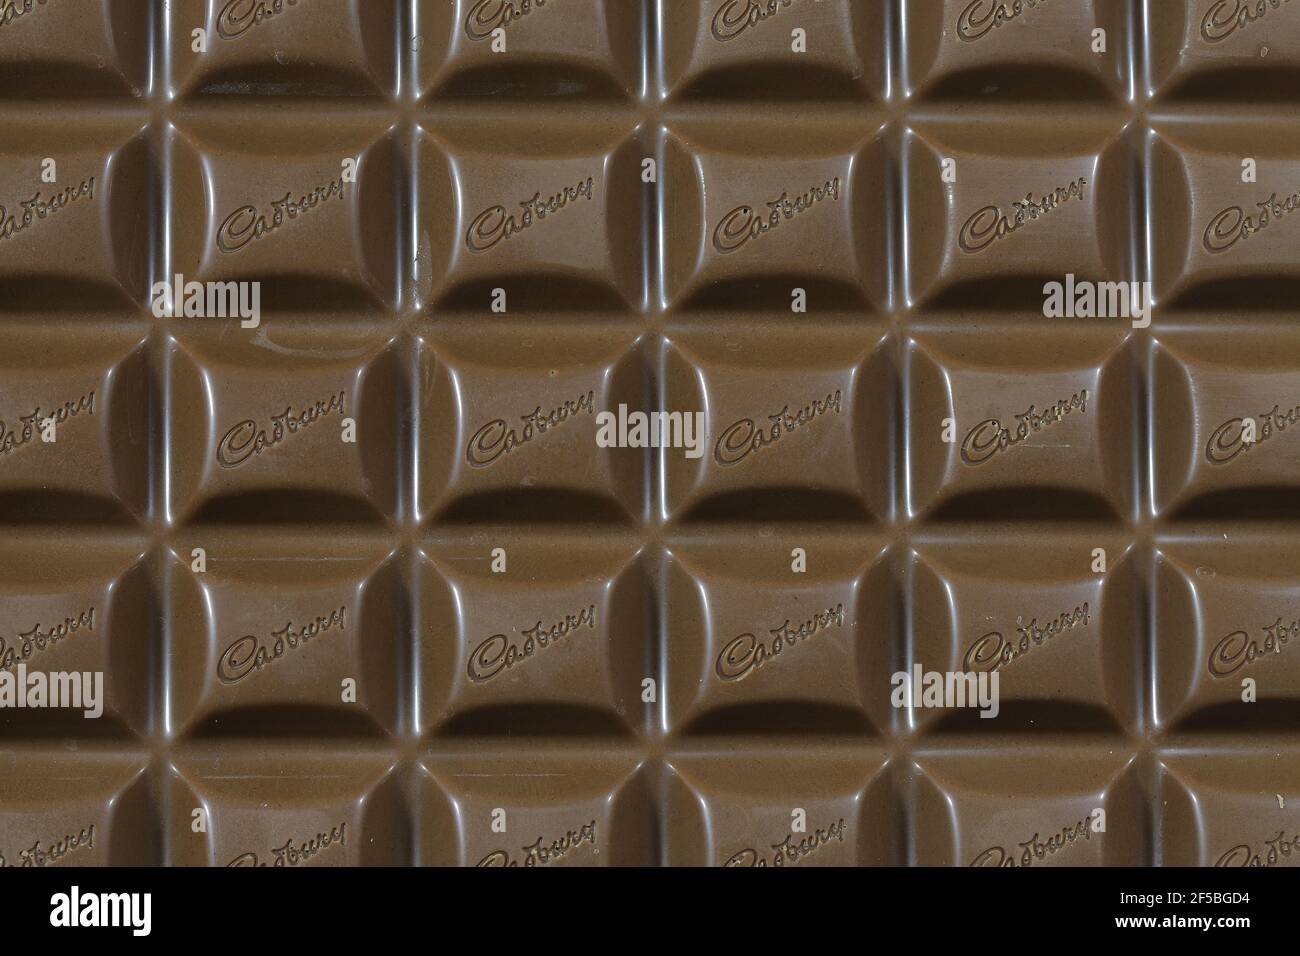 Cadbury Dairy Milk bar of chocolate Stock Photo - Alamy